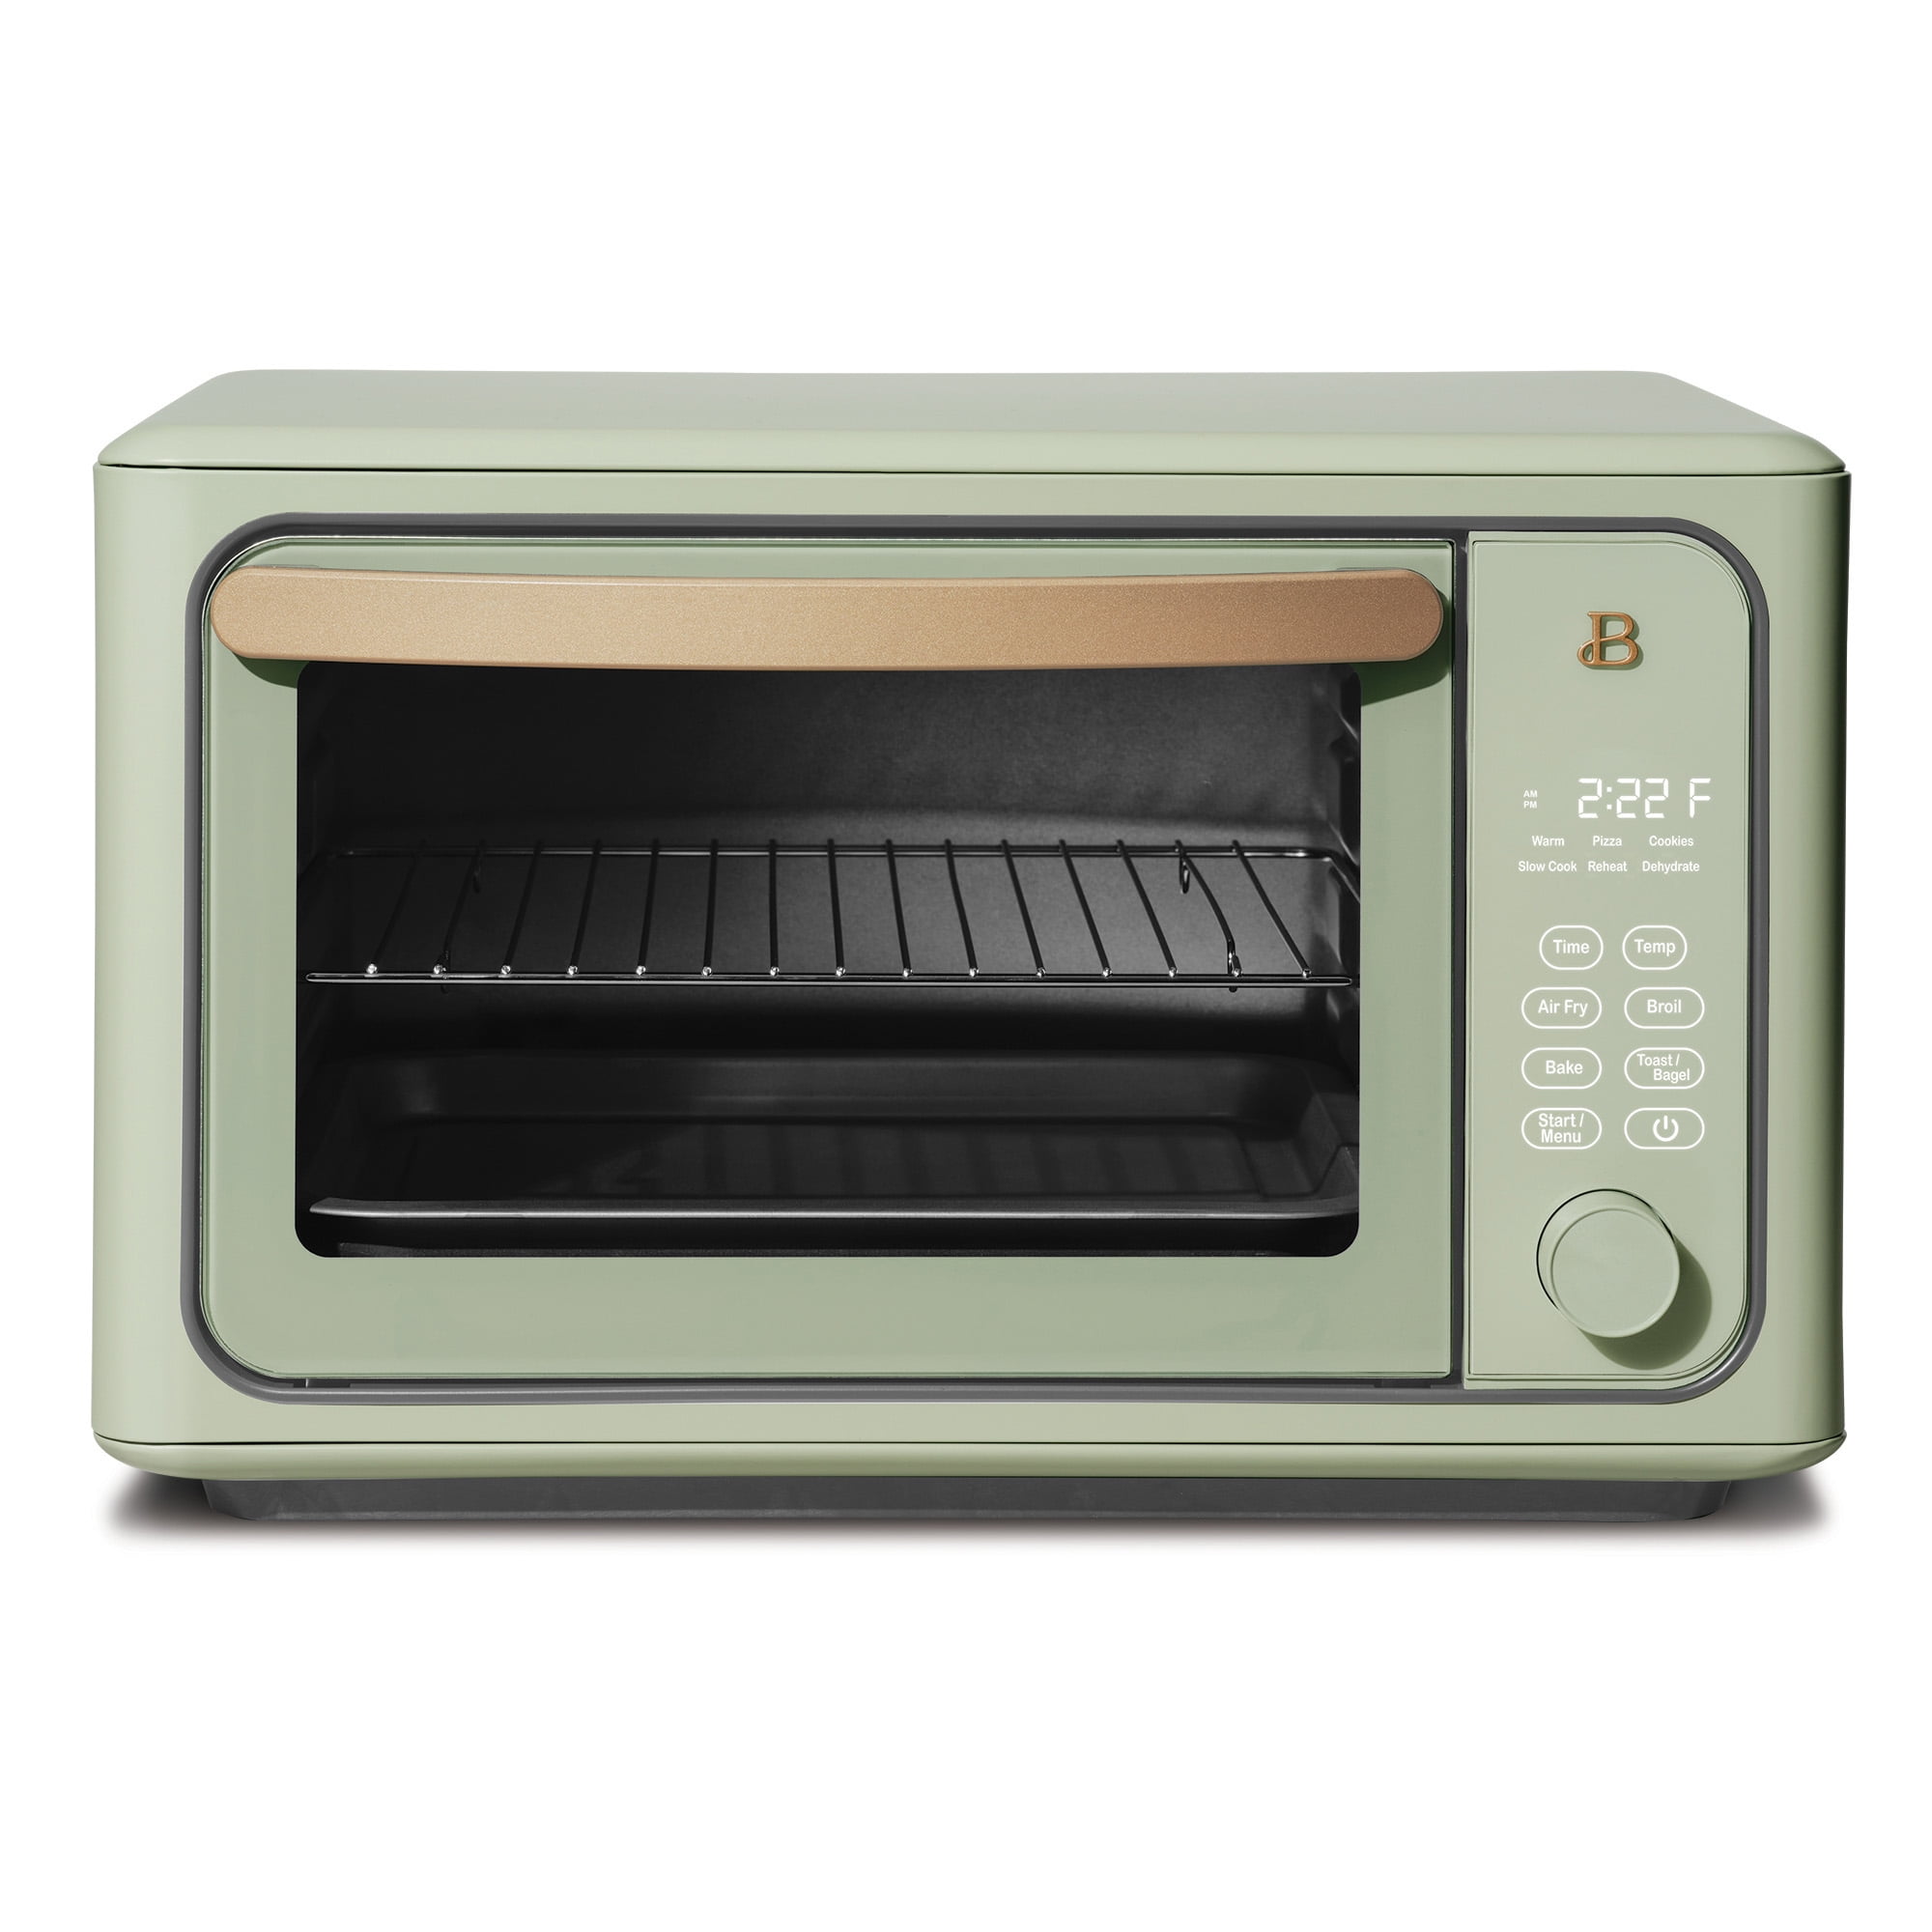 Kalorik® 22 Quart Touchscreen Air Fryer Toaster Oven, Stainless Steel